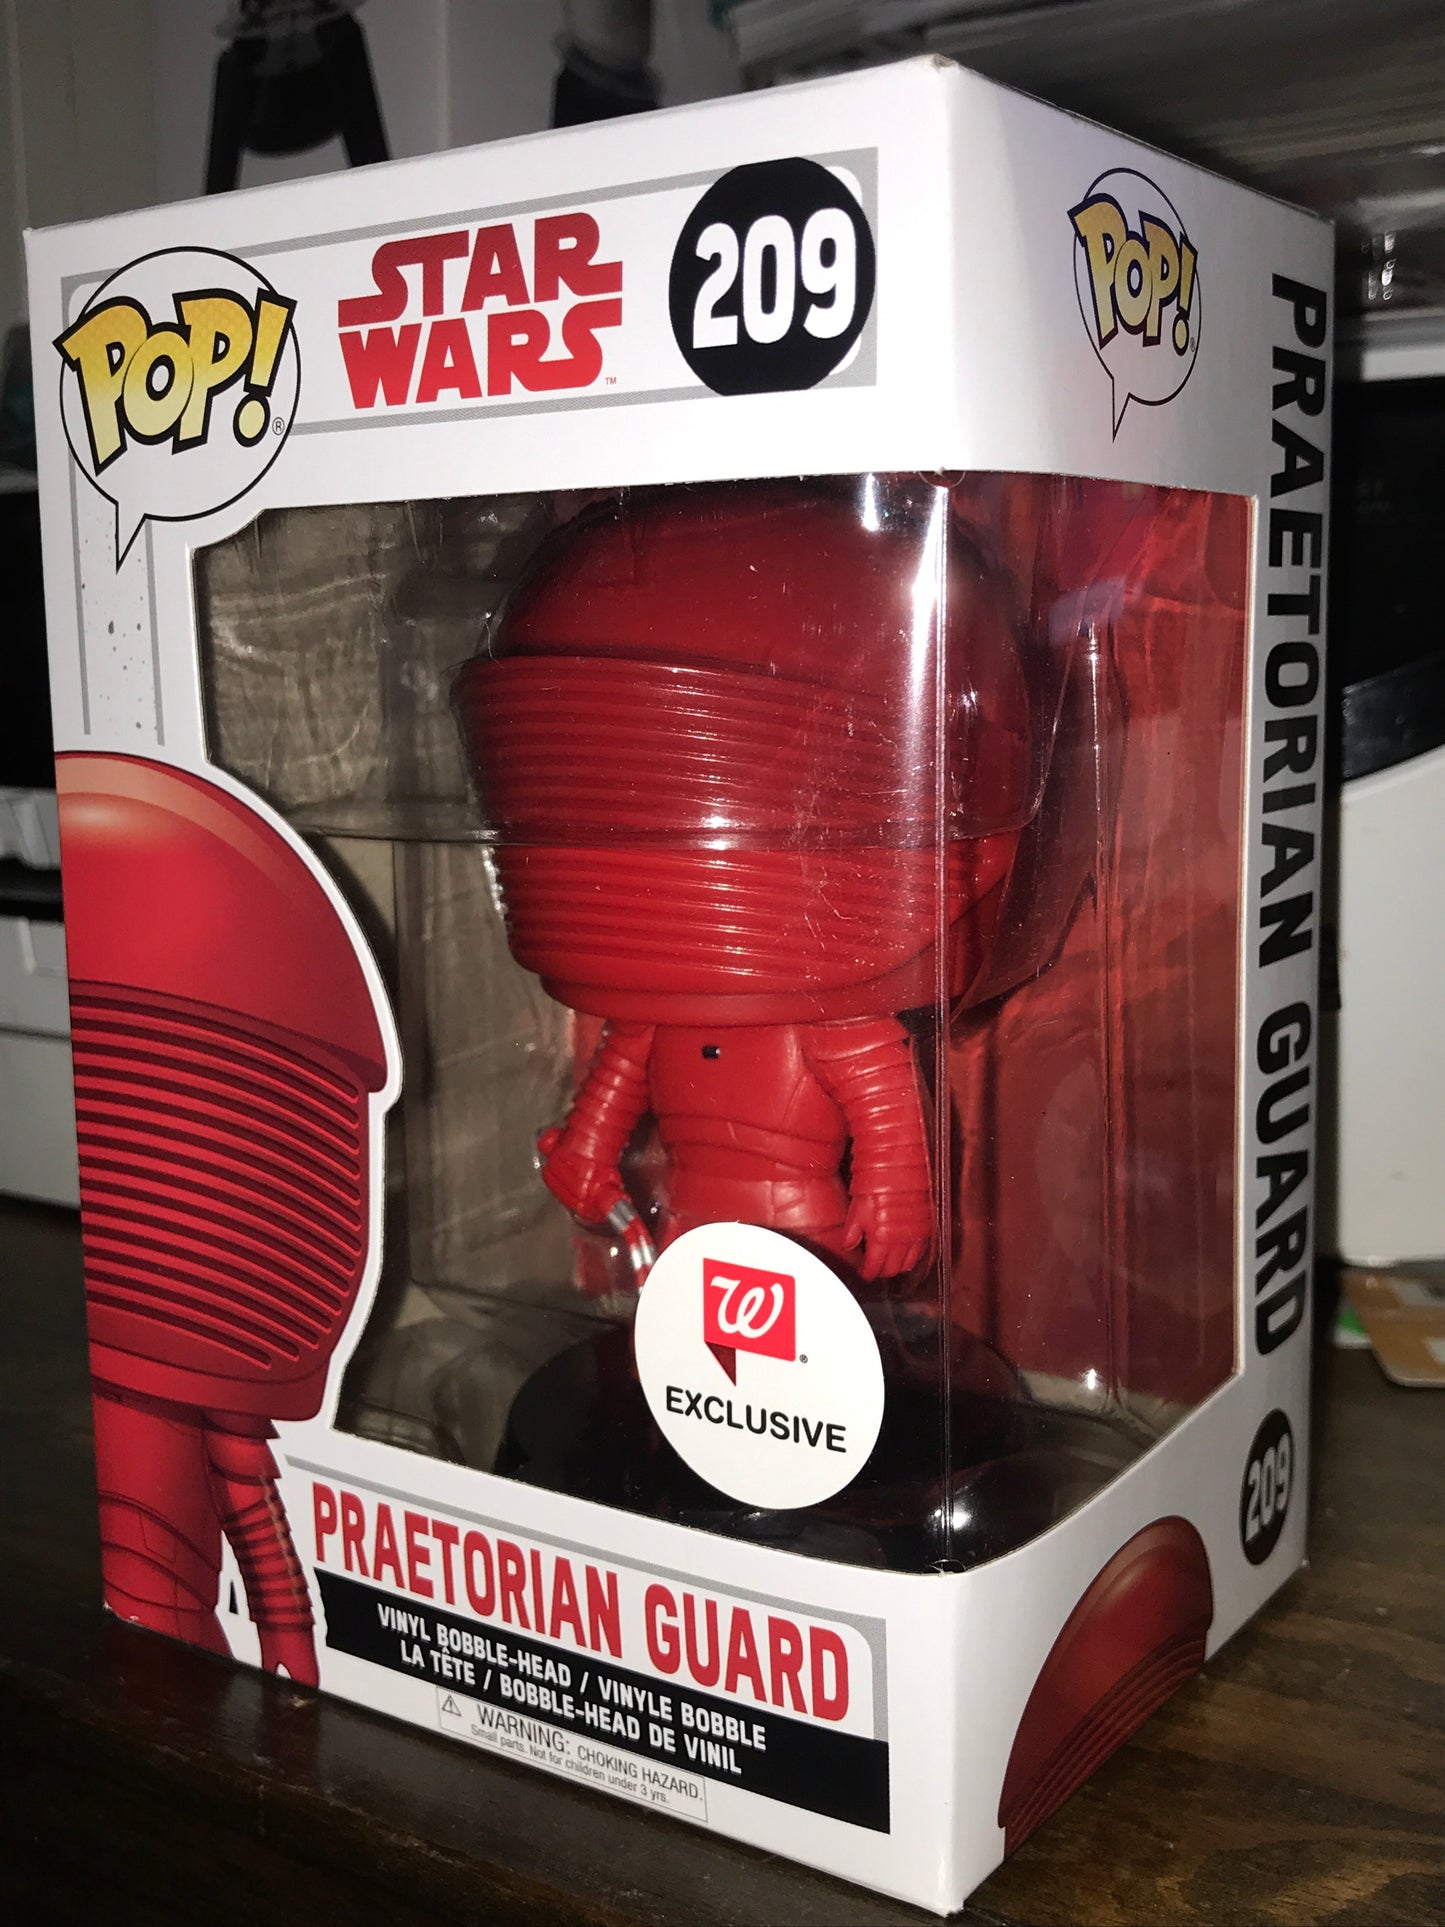 Star Wars Praetorian Guard 209 exclusive Funko Pop! Vinyl Figure